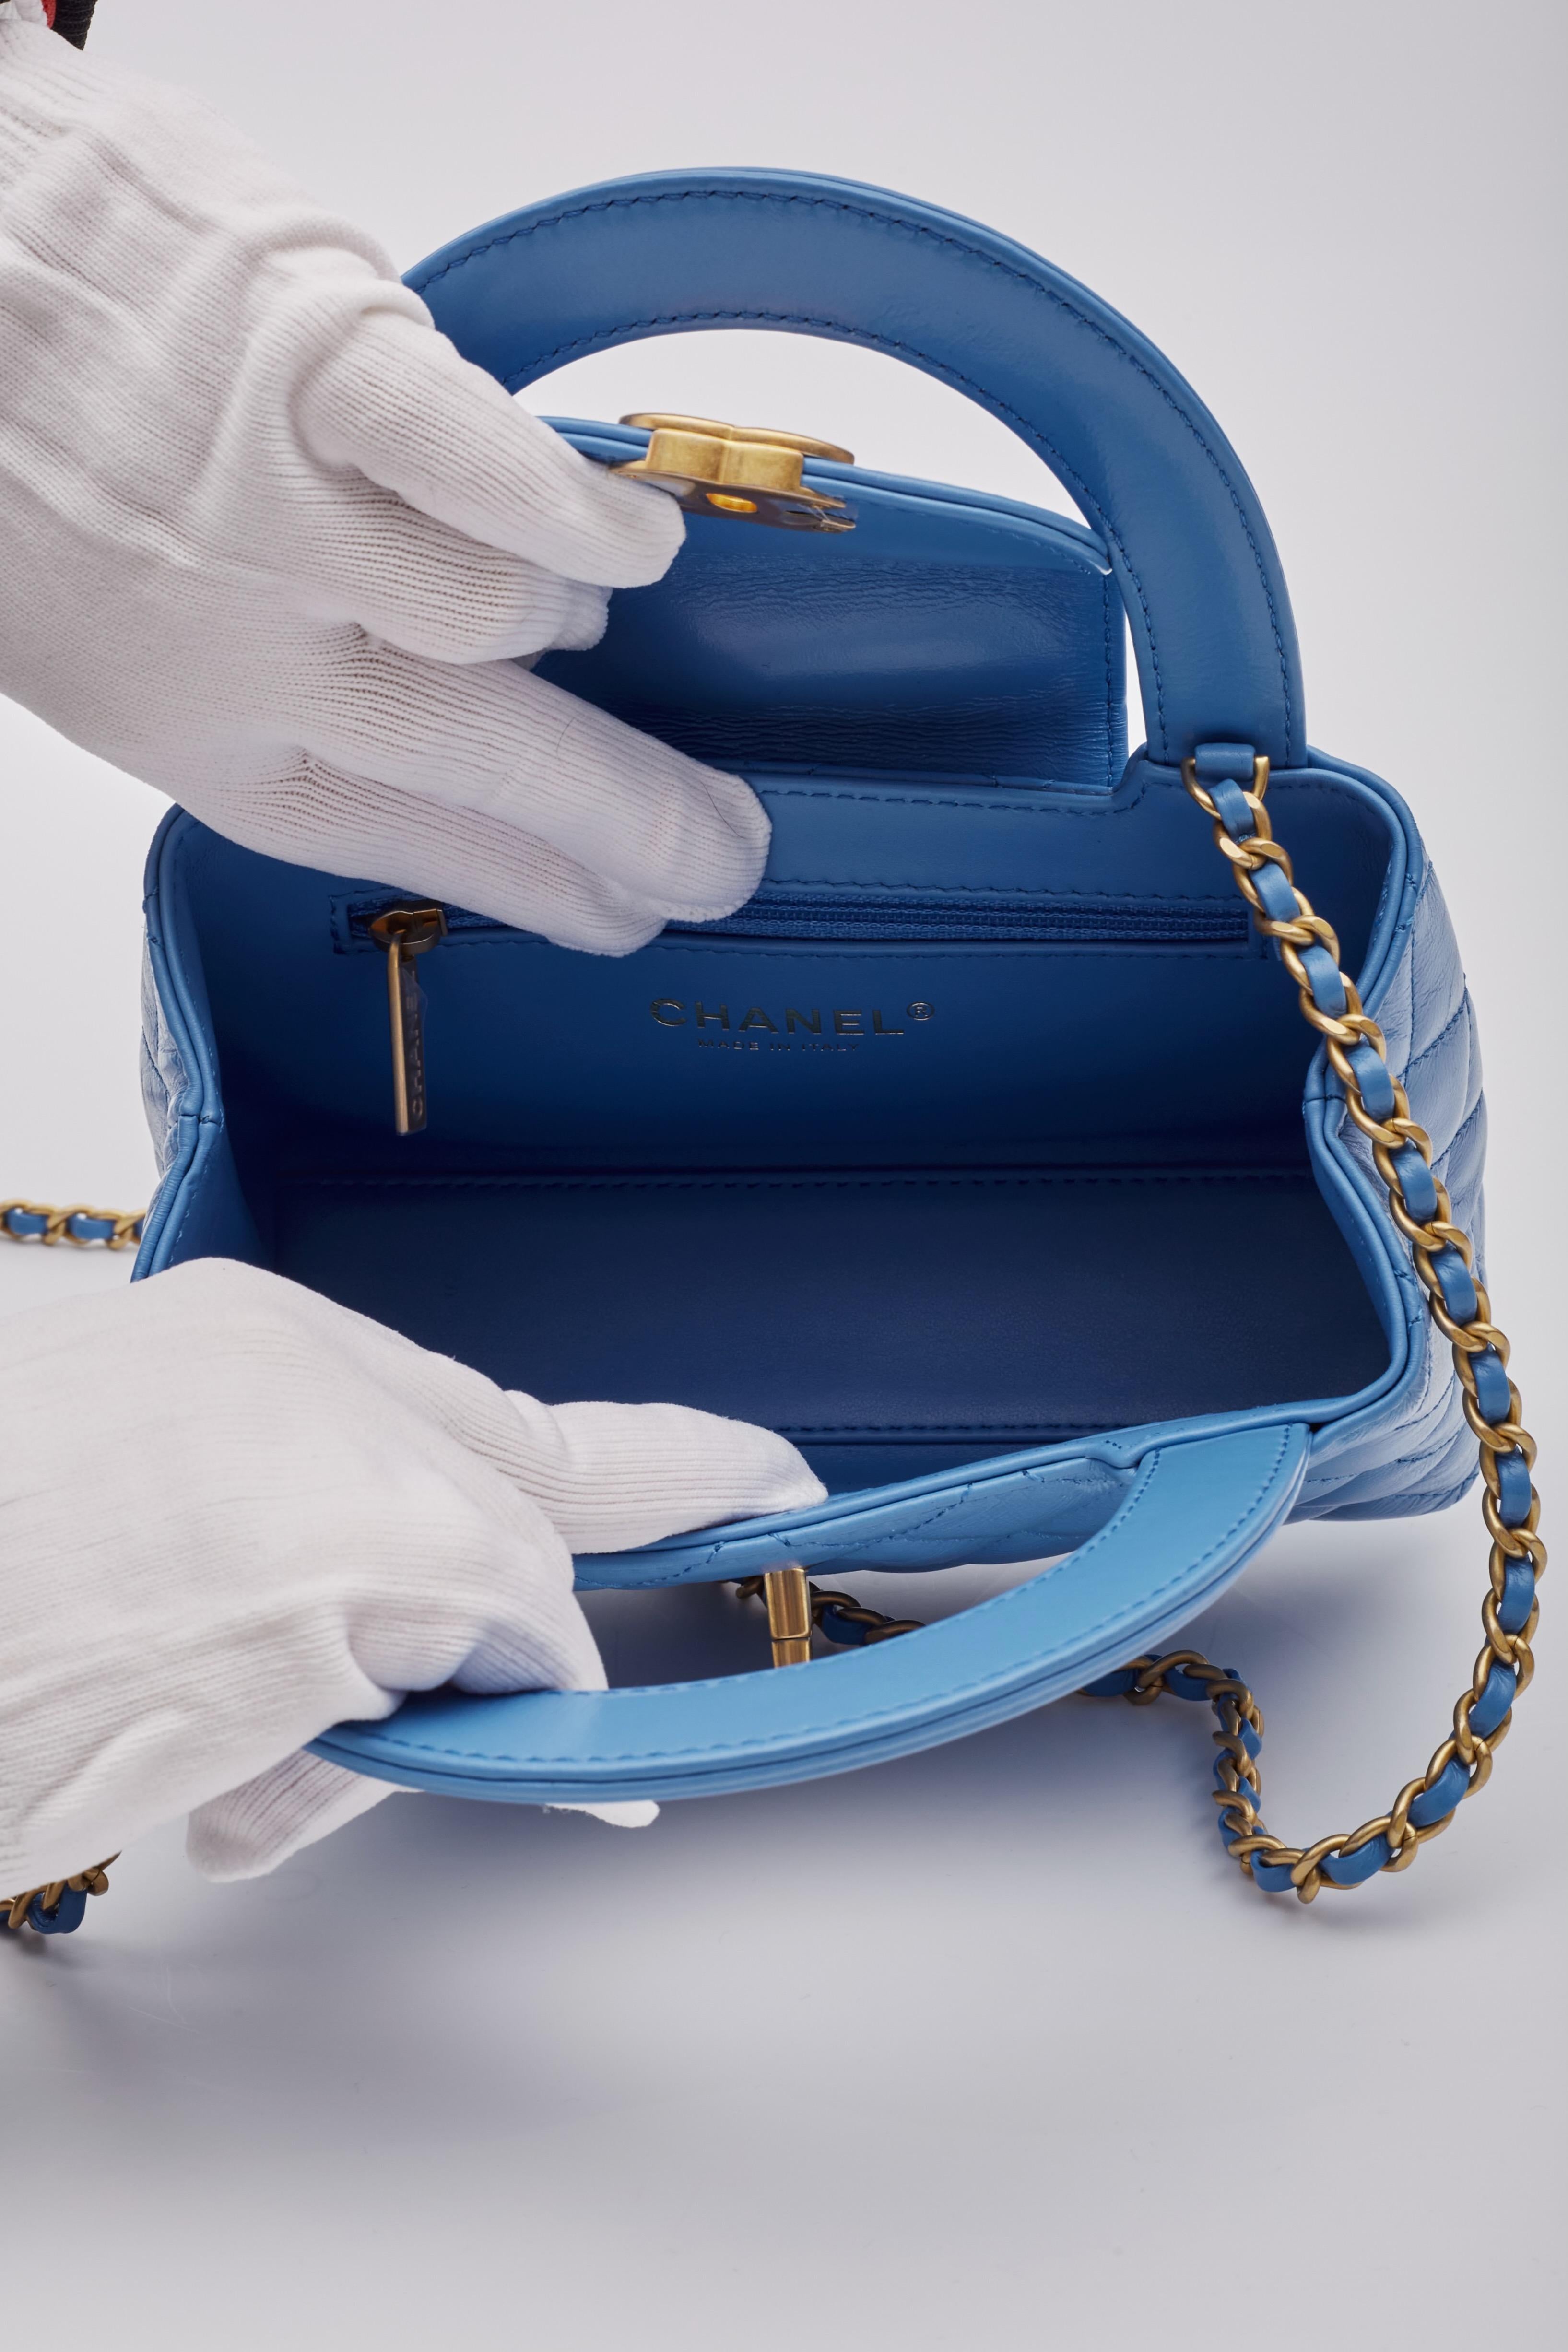 Chanel Blue Calfskin Mini Shopping Kelly Bag For Sale 7